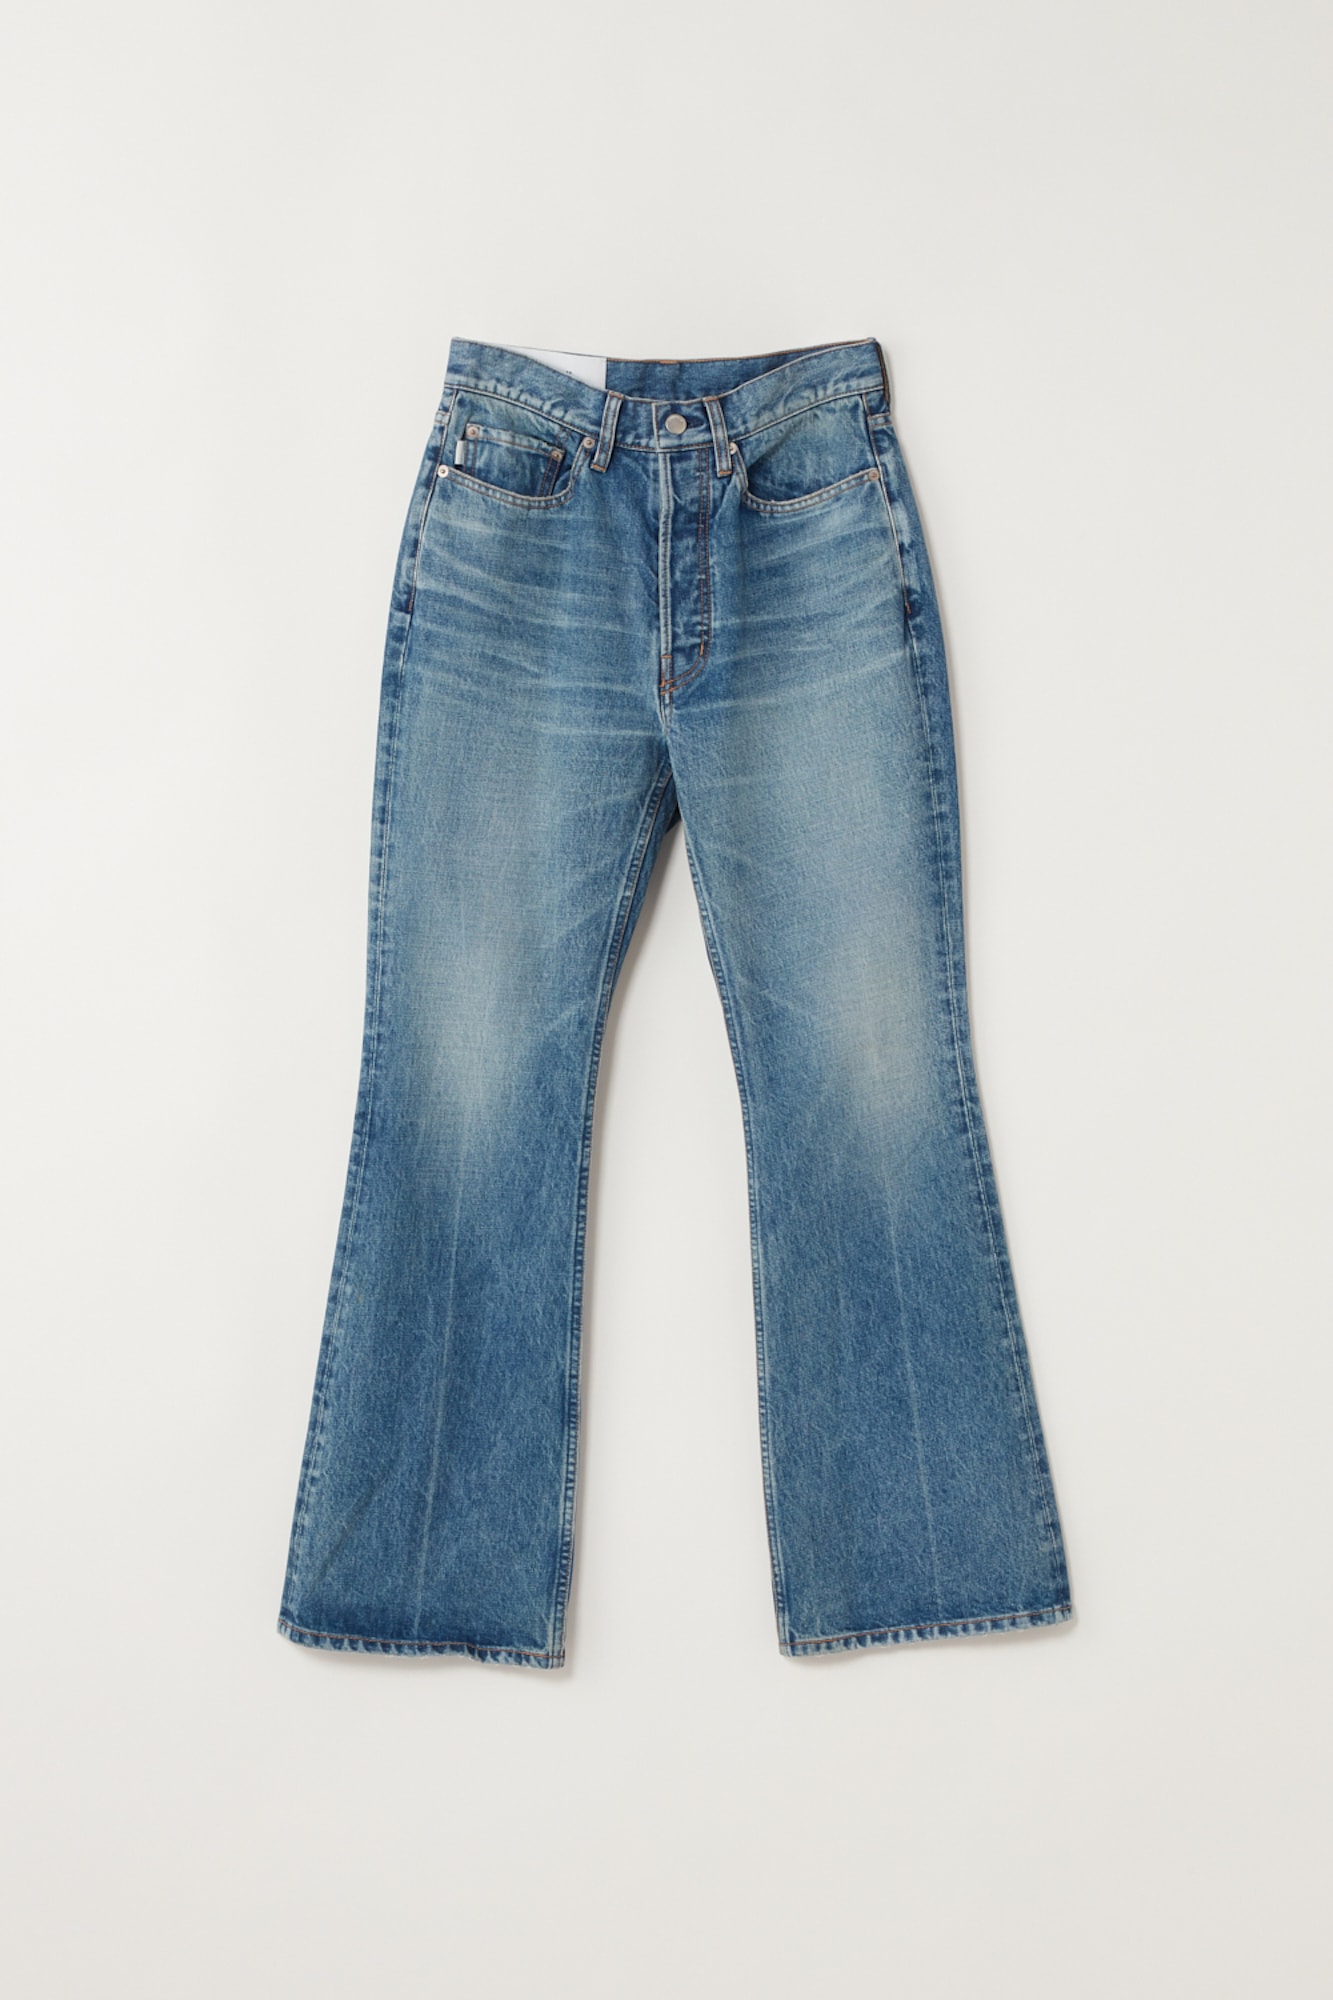 AMBUSH Denim Capsule Collection Release Jeans Indigo Dye Japanese Craftsmanship 